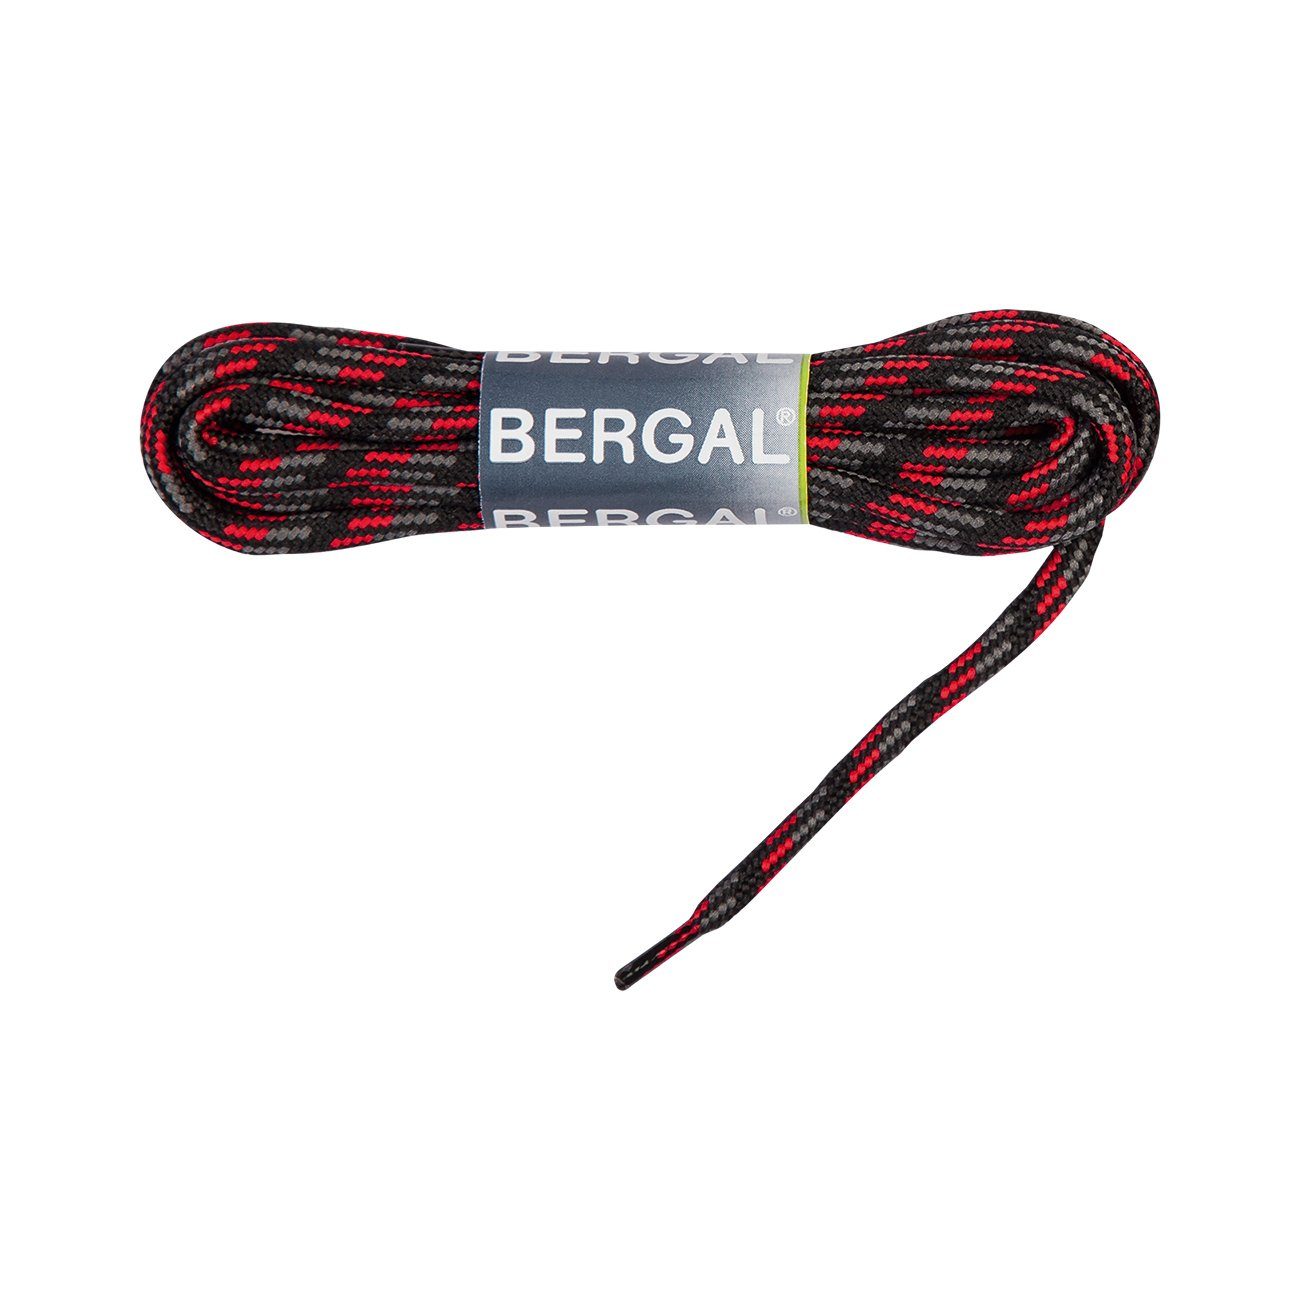 Schwarz/Rot/Grau Trekkingschuhe Schnürsenkel für Bergal Bergschuhsenkel